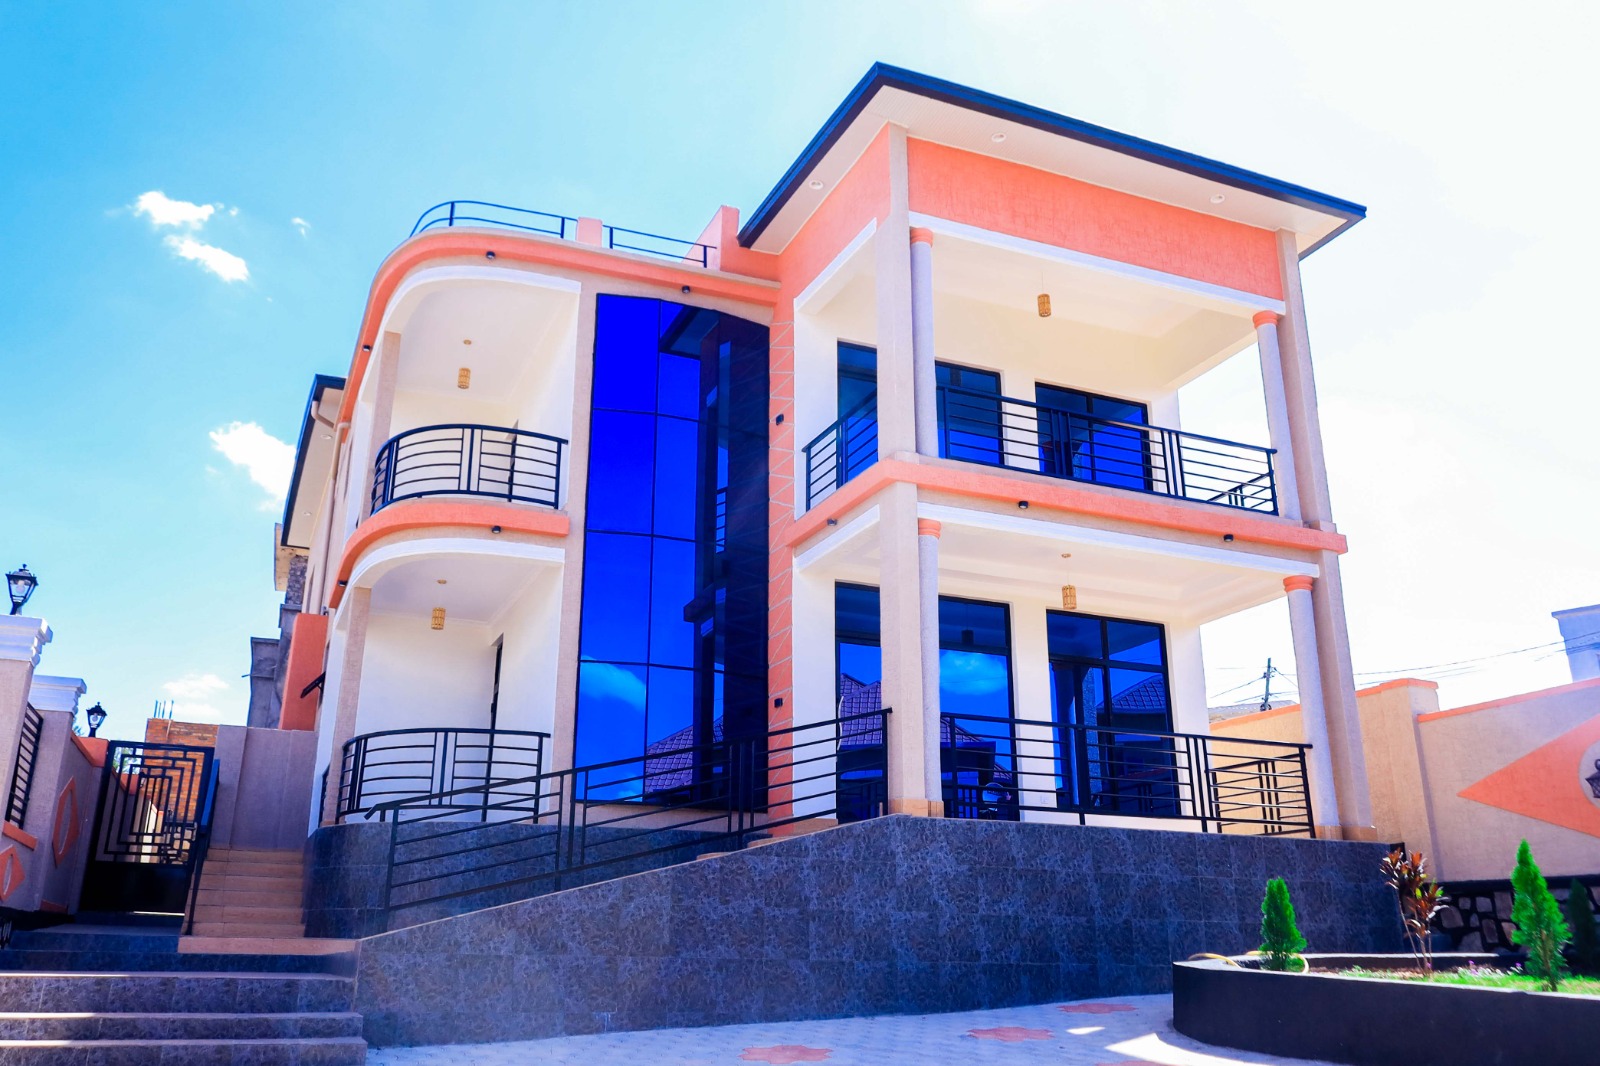 ID:FF058 Kibagabaga. Kibagabaga good and New House for sales with 6 bedrooms in Kigali-Rwanda.Call/watsap +250788385831